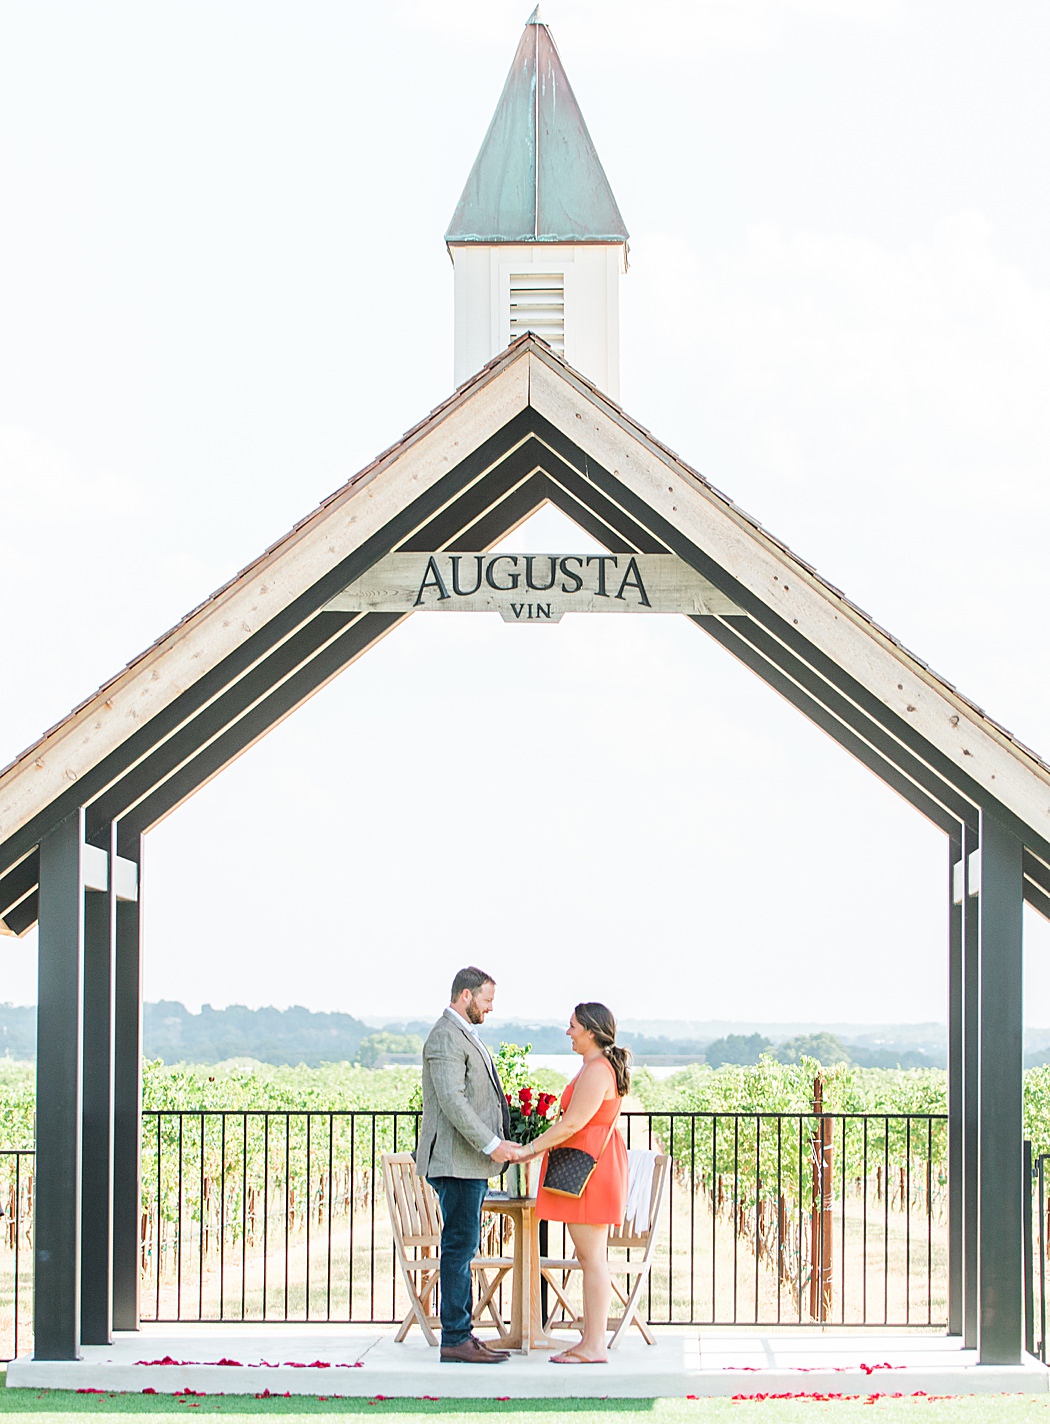 Surprise proposal at Augusta Vin vineyard in Fredericksburg Texas by Allison Jeffers Photography 0005